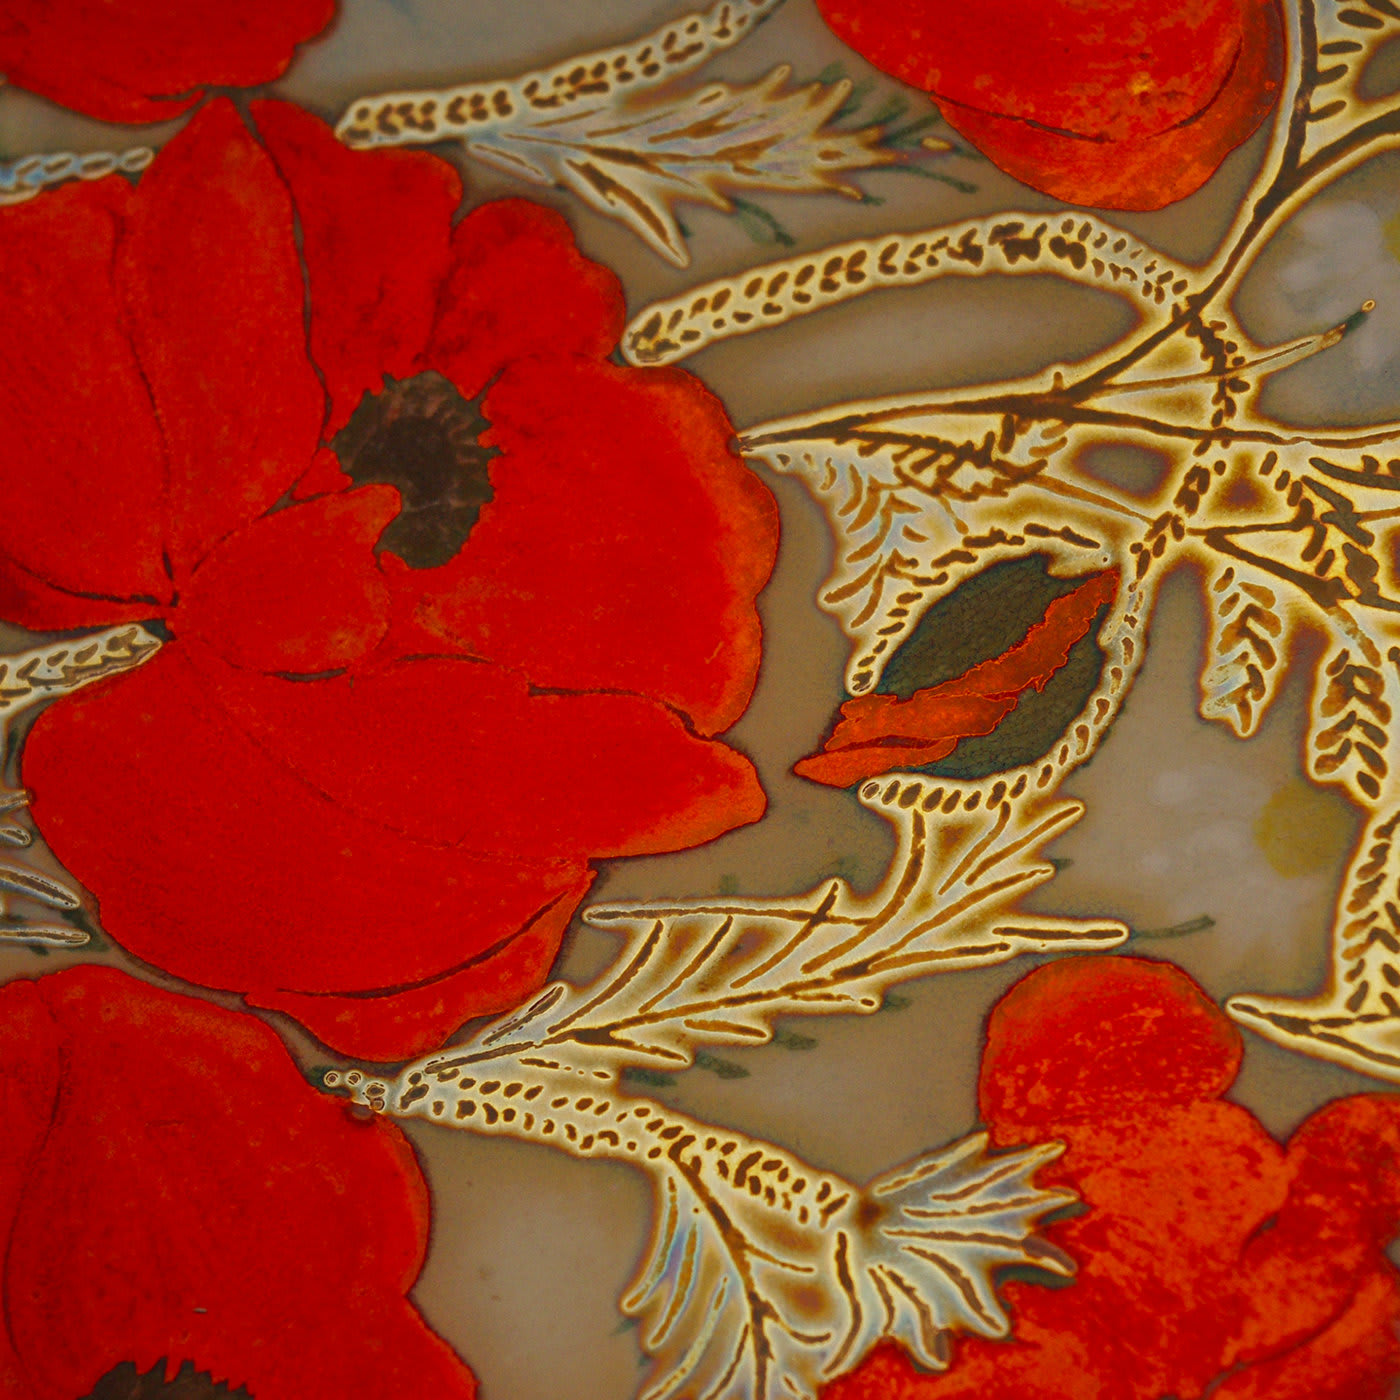 Decorative Plate with Poppy Flowers - Iridescenze